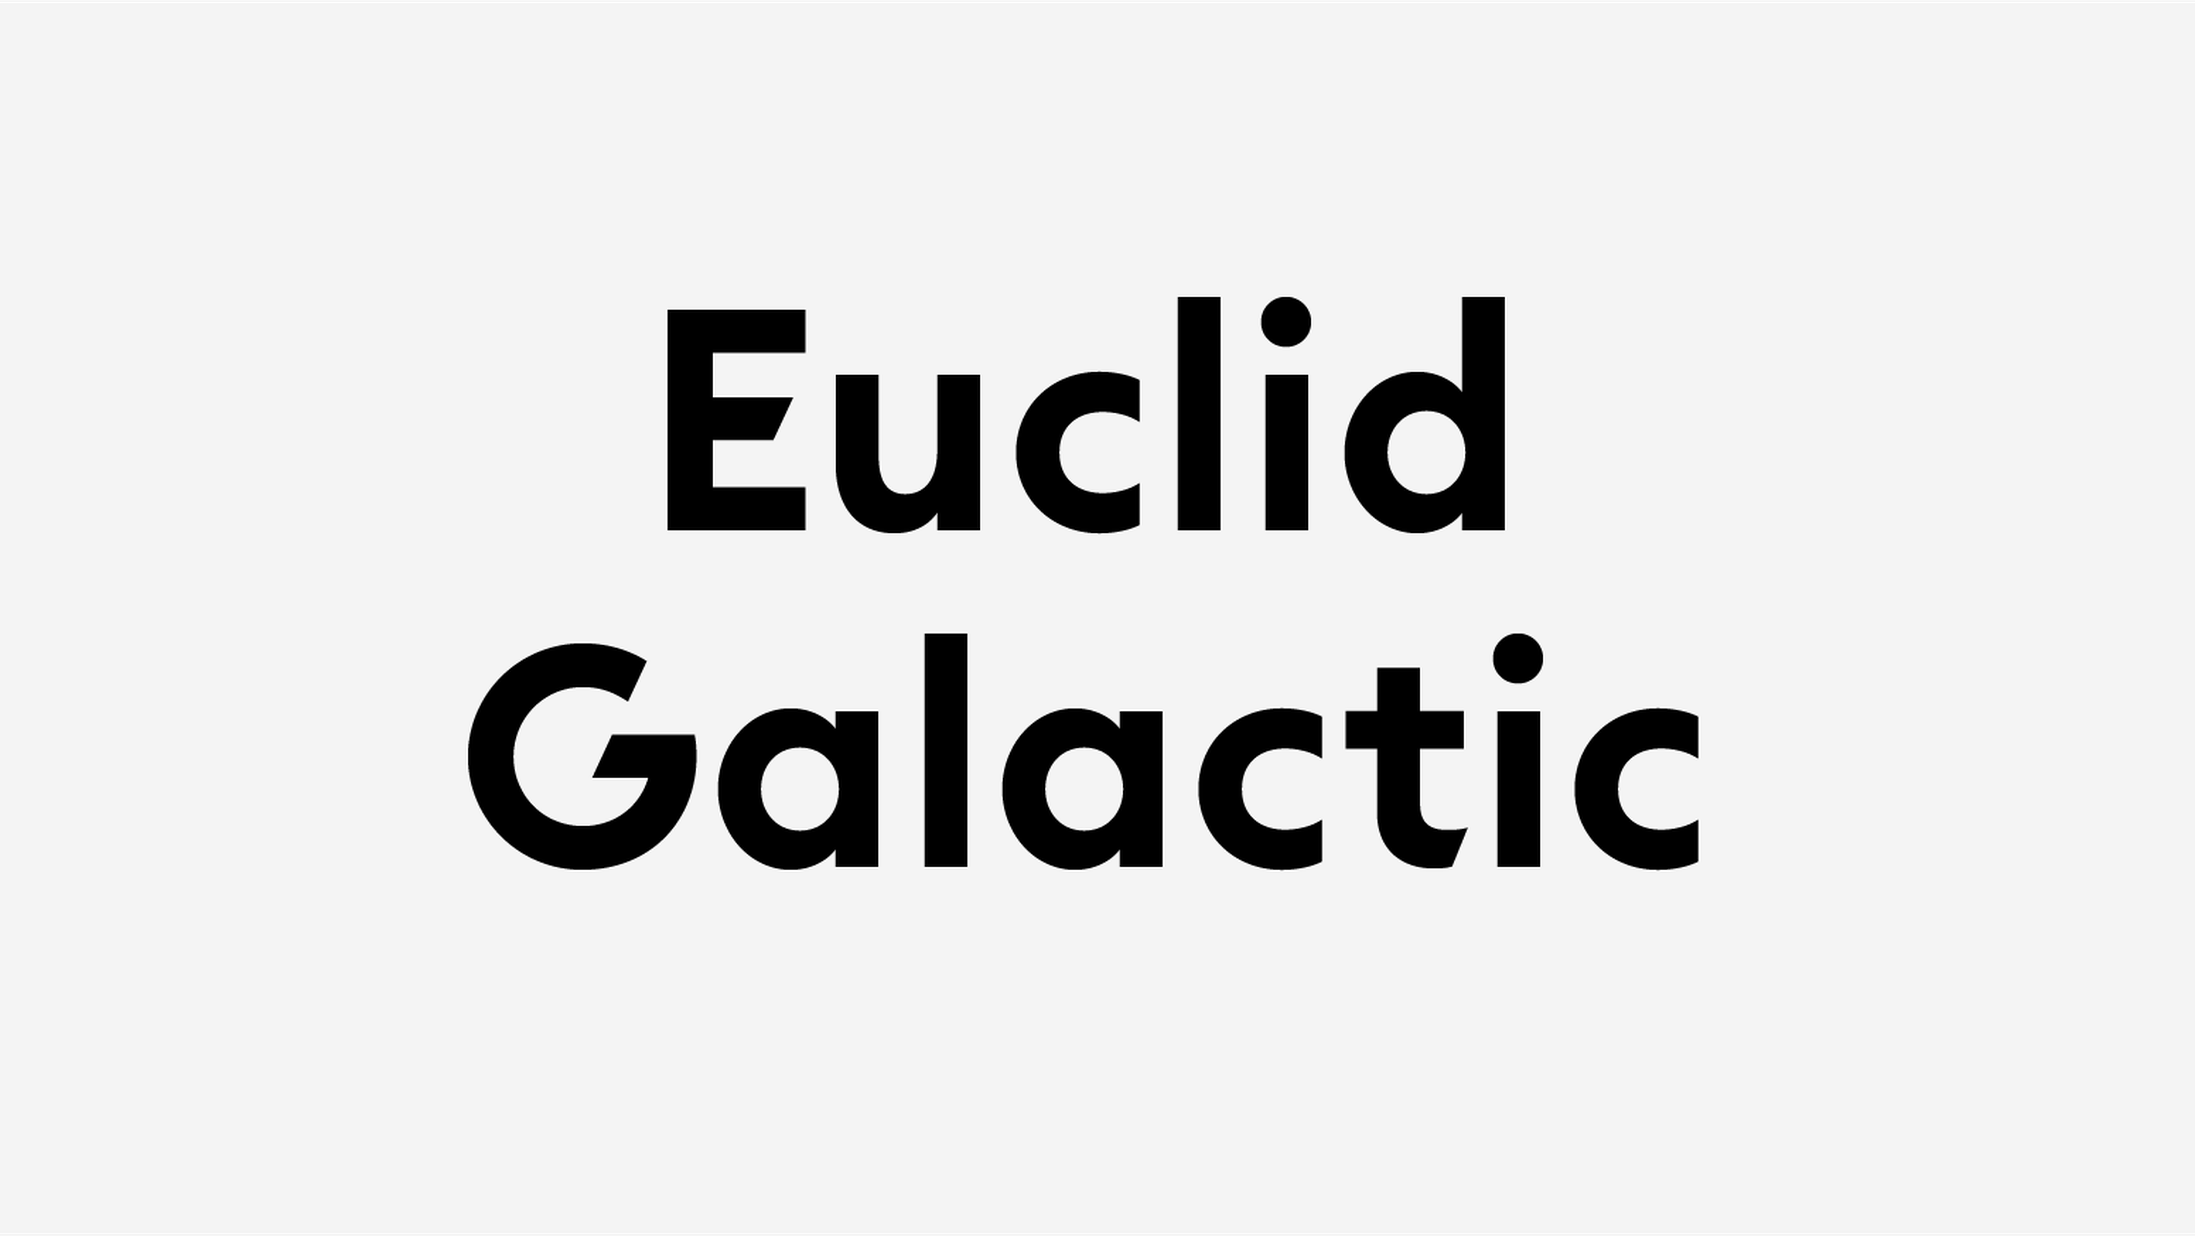 Font Euclid Galactic